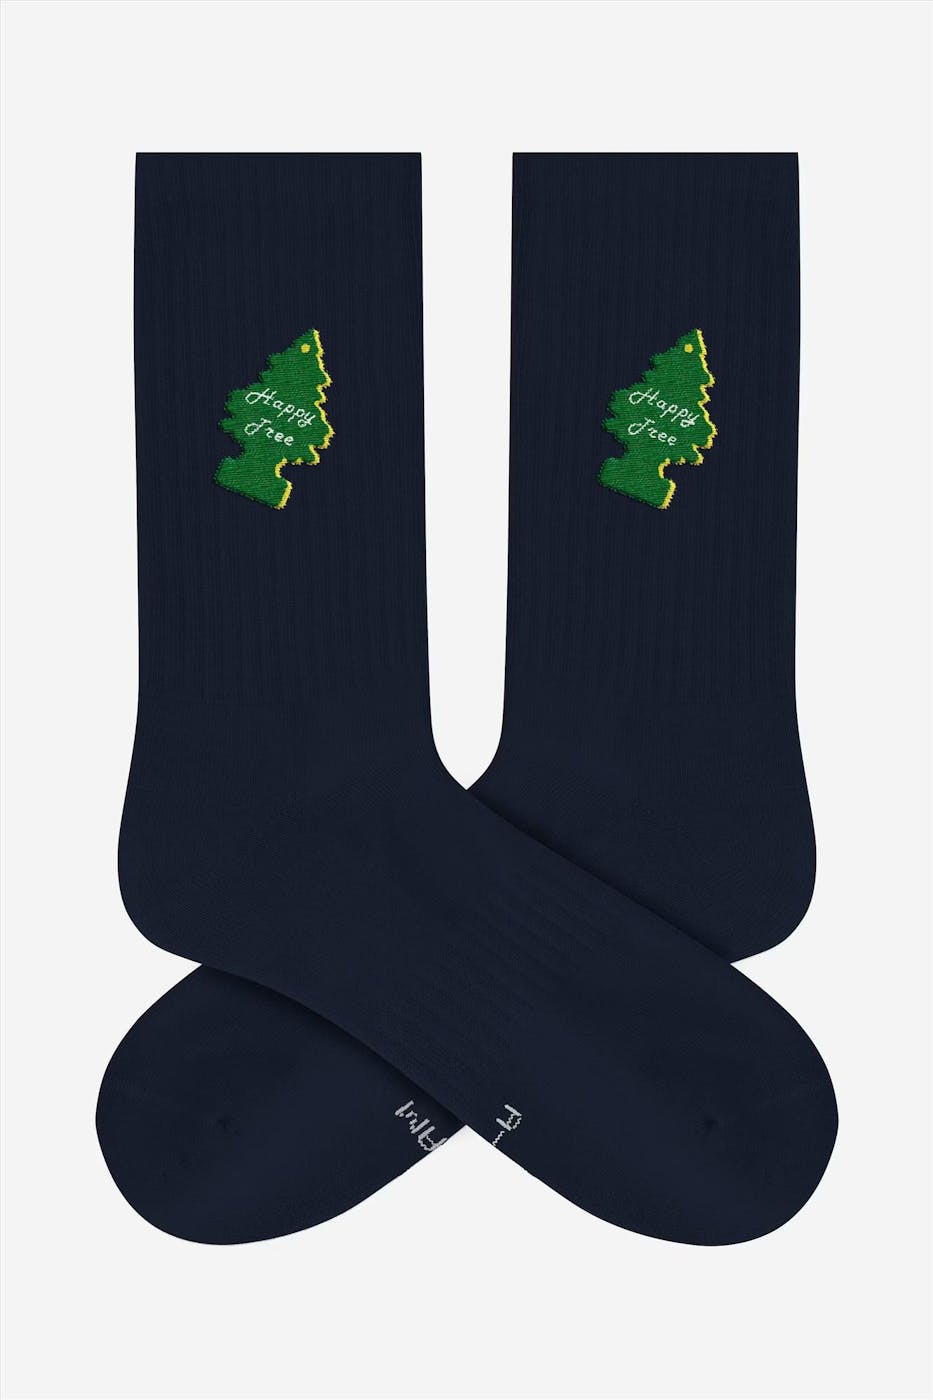 A'dam - Donkerblauwe Happy Tree sokken, maat: 41-46